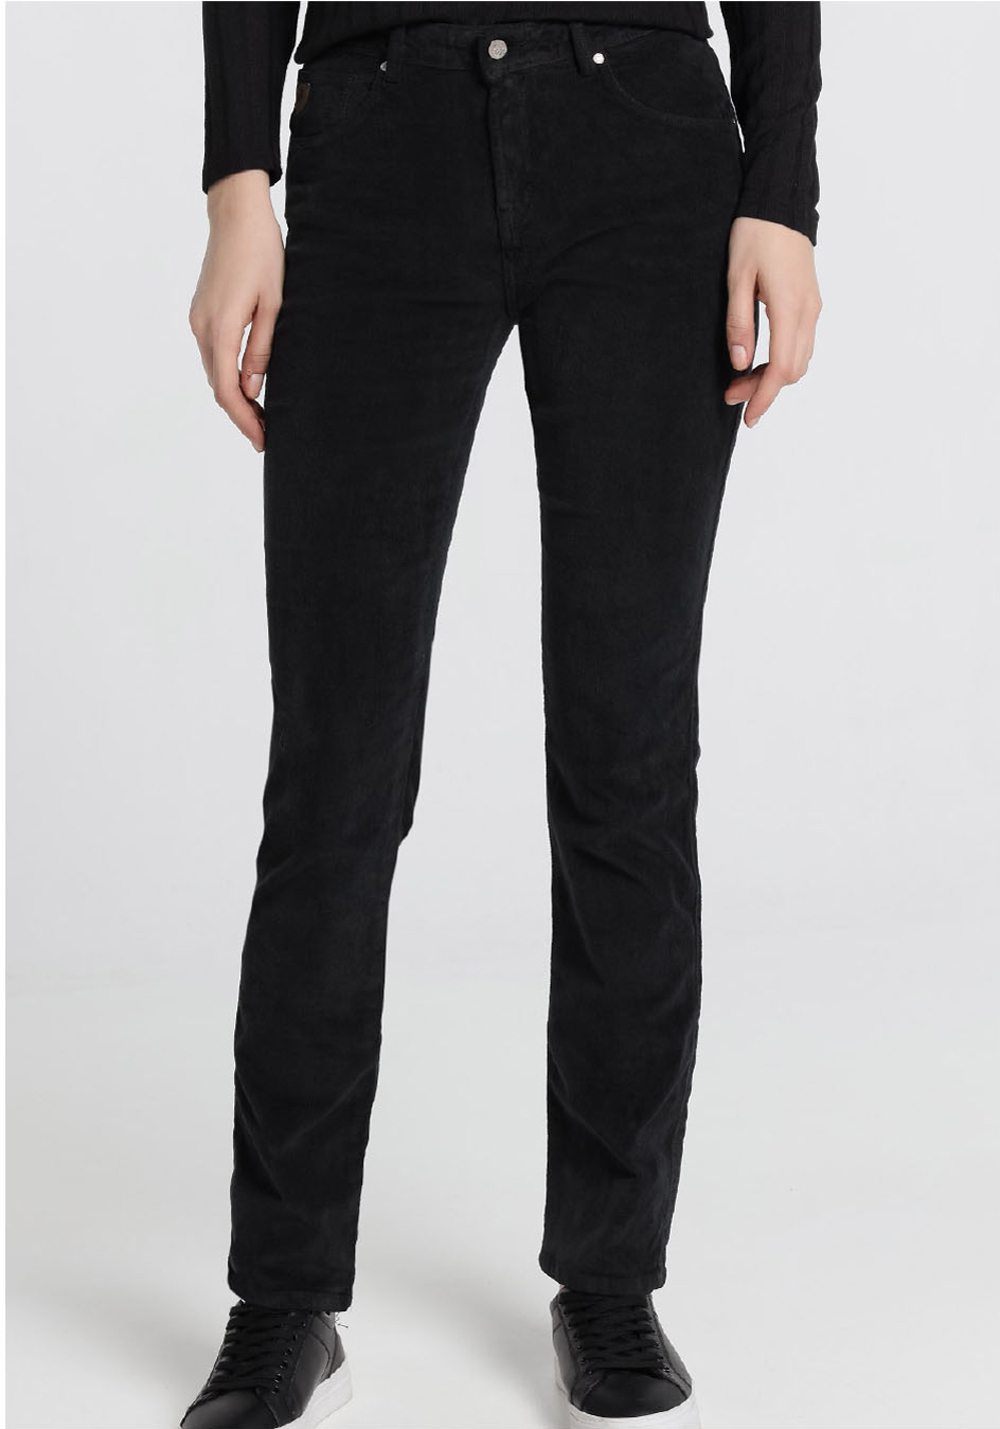 Lois pantalons texans de pana de dona Monic straight 20104/599 negre